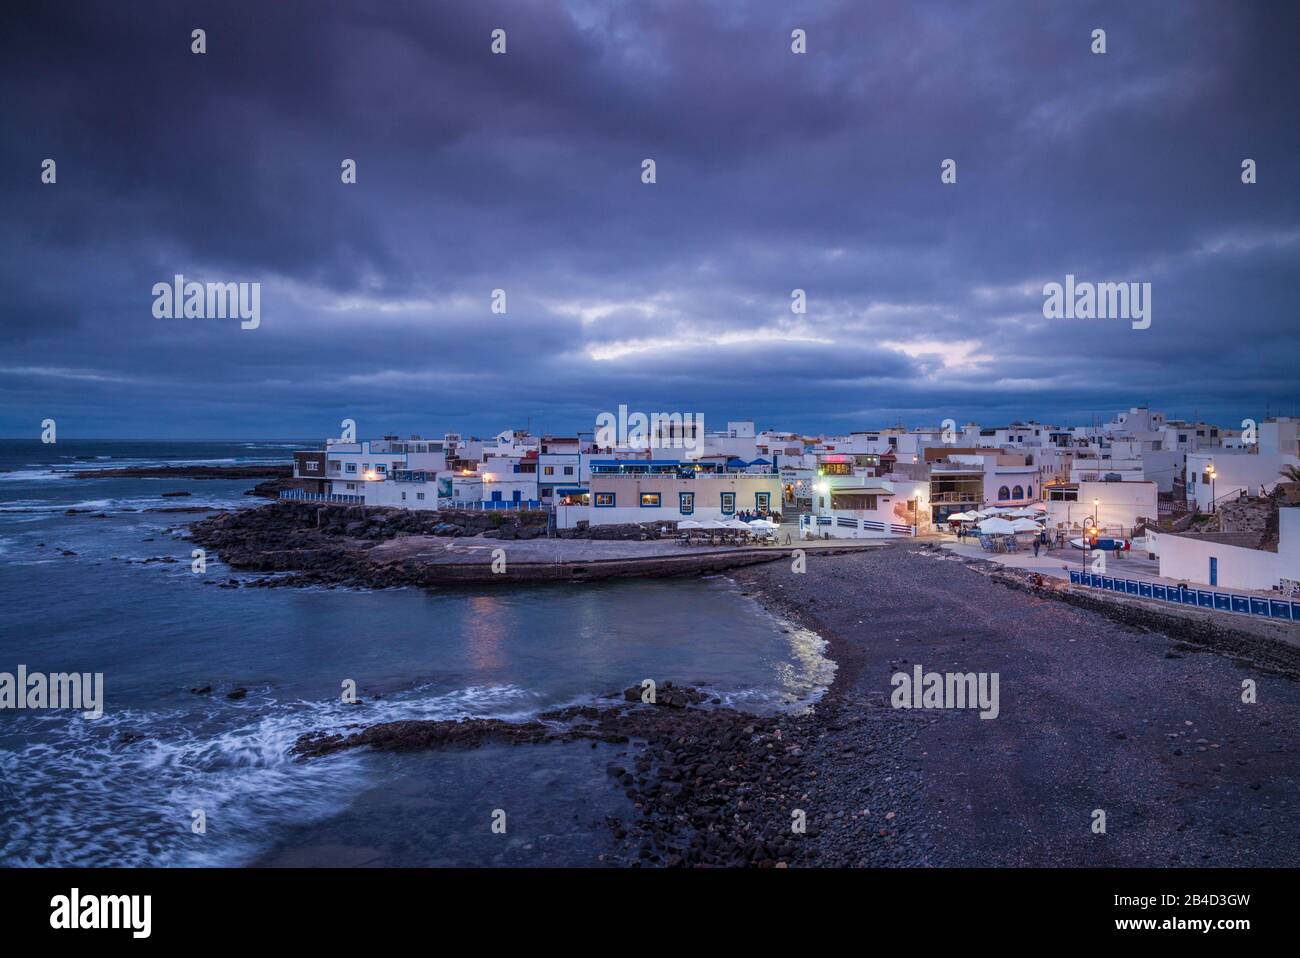 Spain, Canary Islands, Fuerteventura Island,  El Cotillo,  Fishermans Quarter, high angle view, dusk Stock Photo